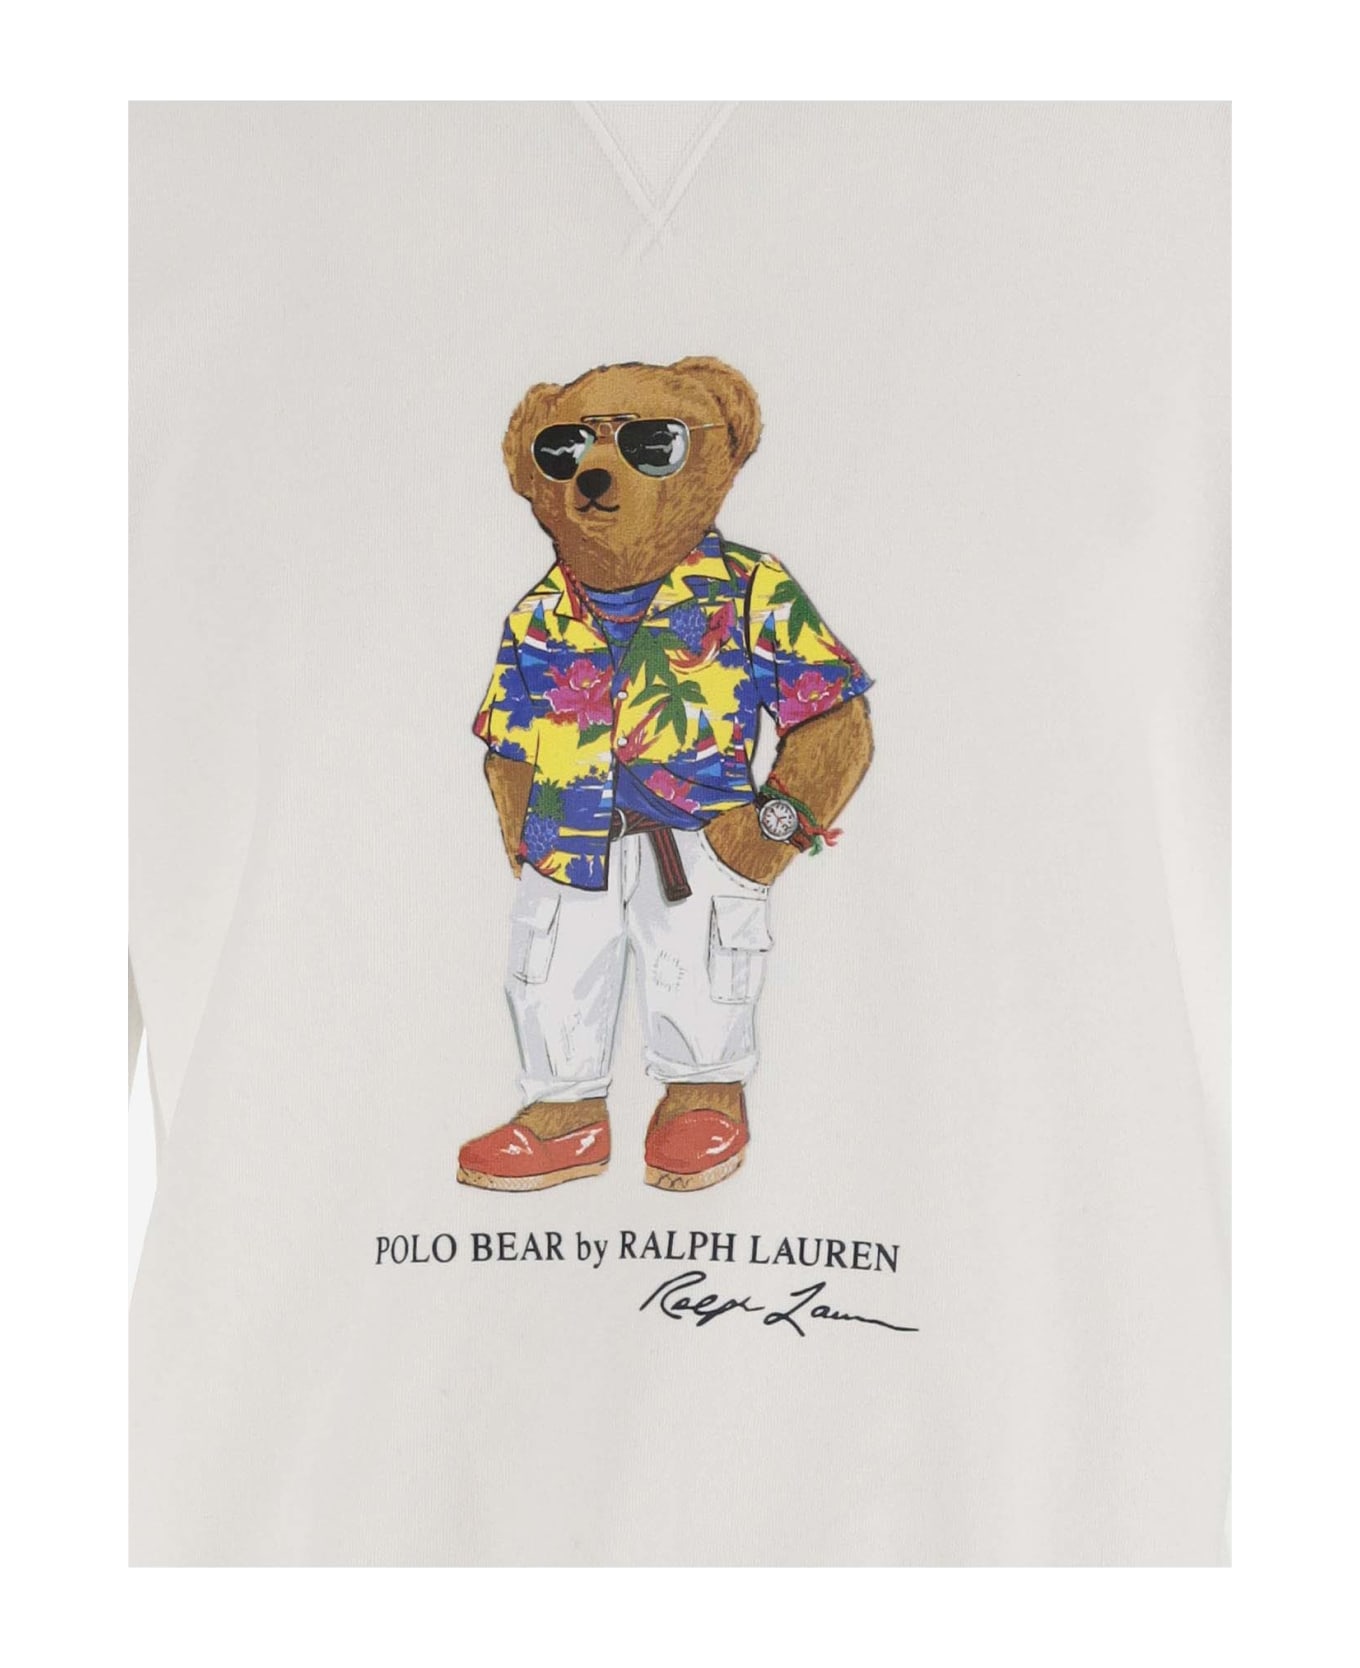 Polo Ralph Lauren Cotton Blend Sweatshirt With Polo Bear Pattern - White フリース